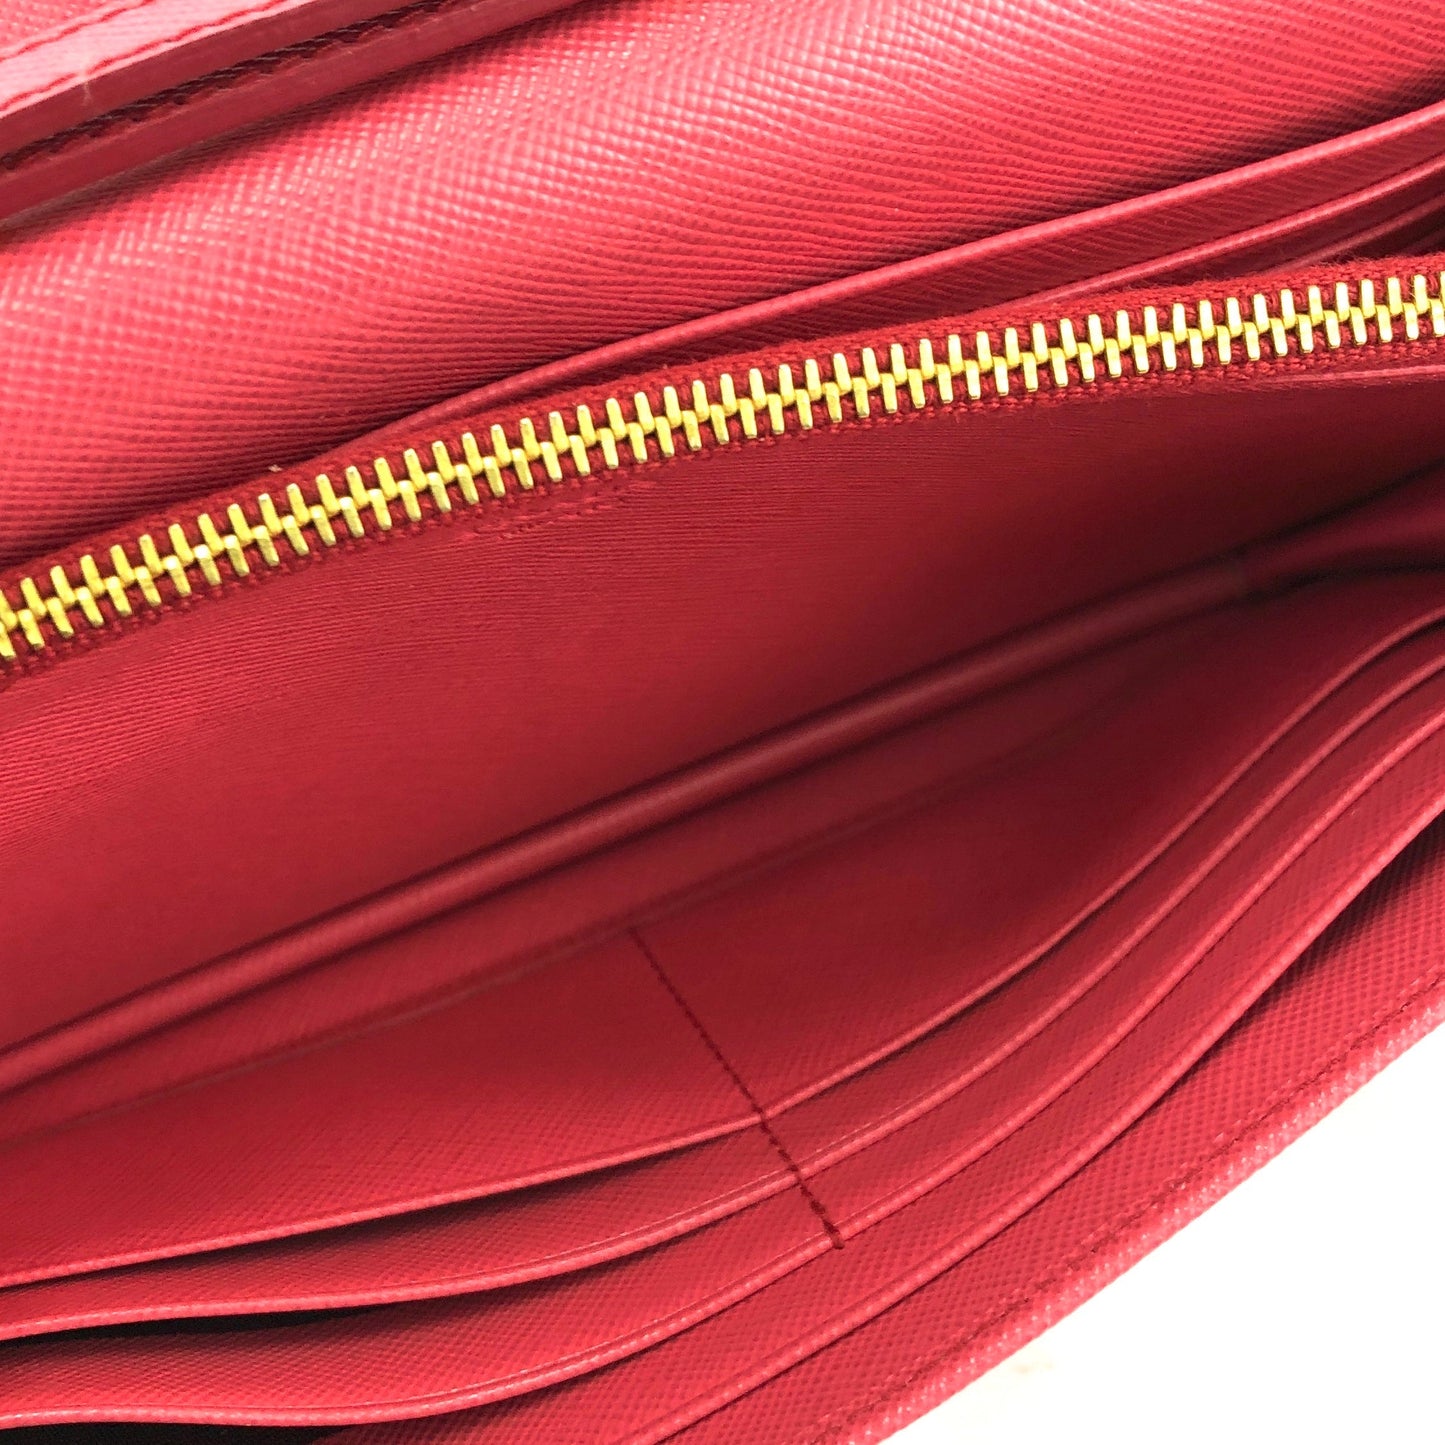 PRADA Logo Saffiano leather Chain Wallet Shoulderbag 1M1405 Pink Vintage Old jz8uth